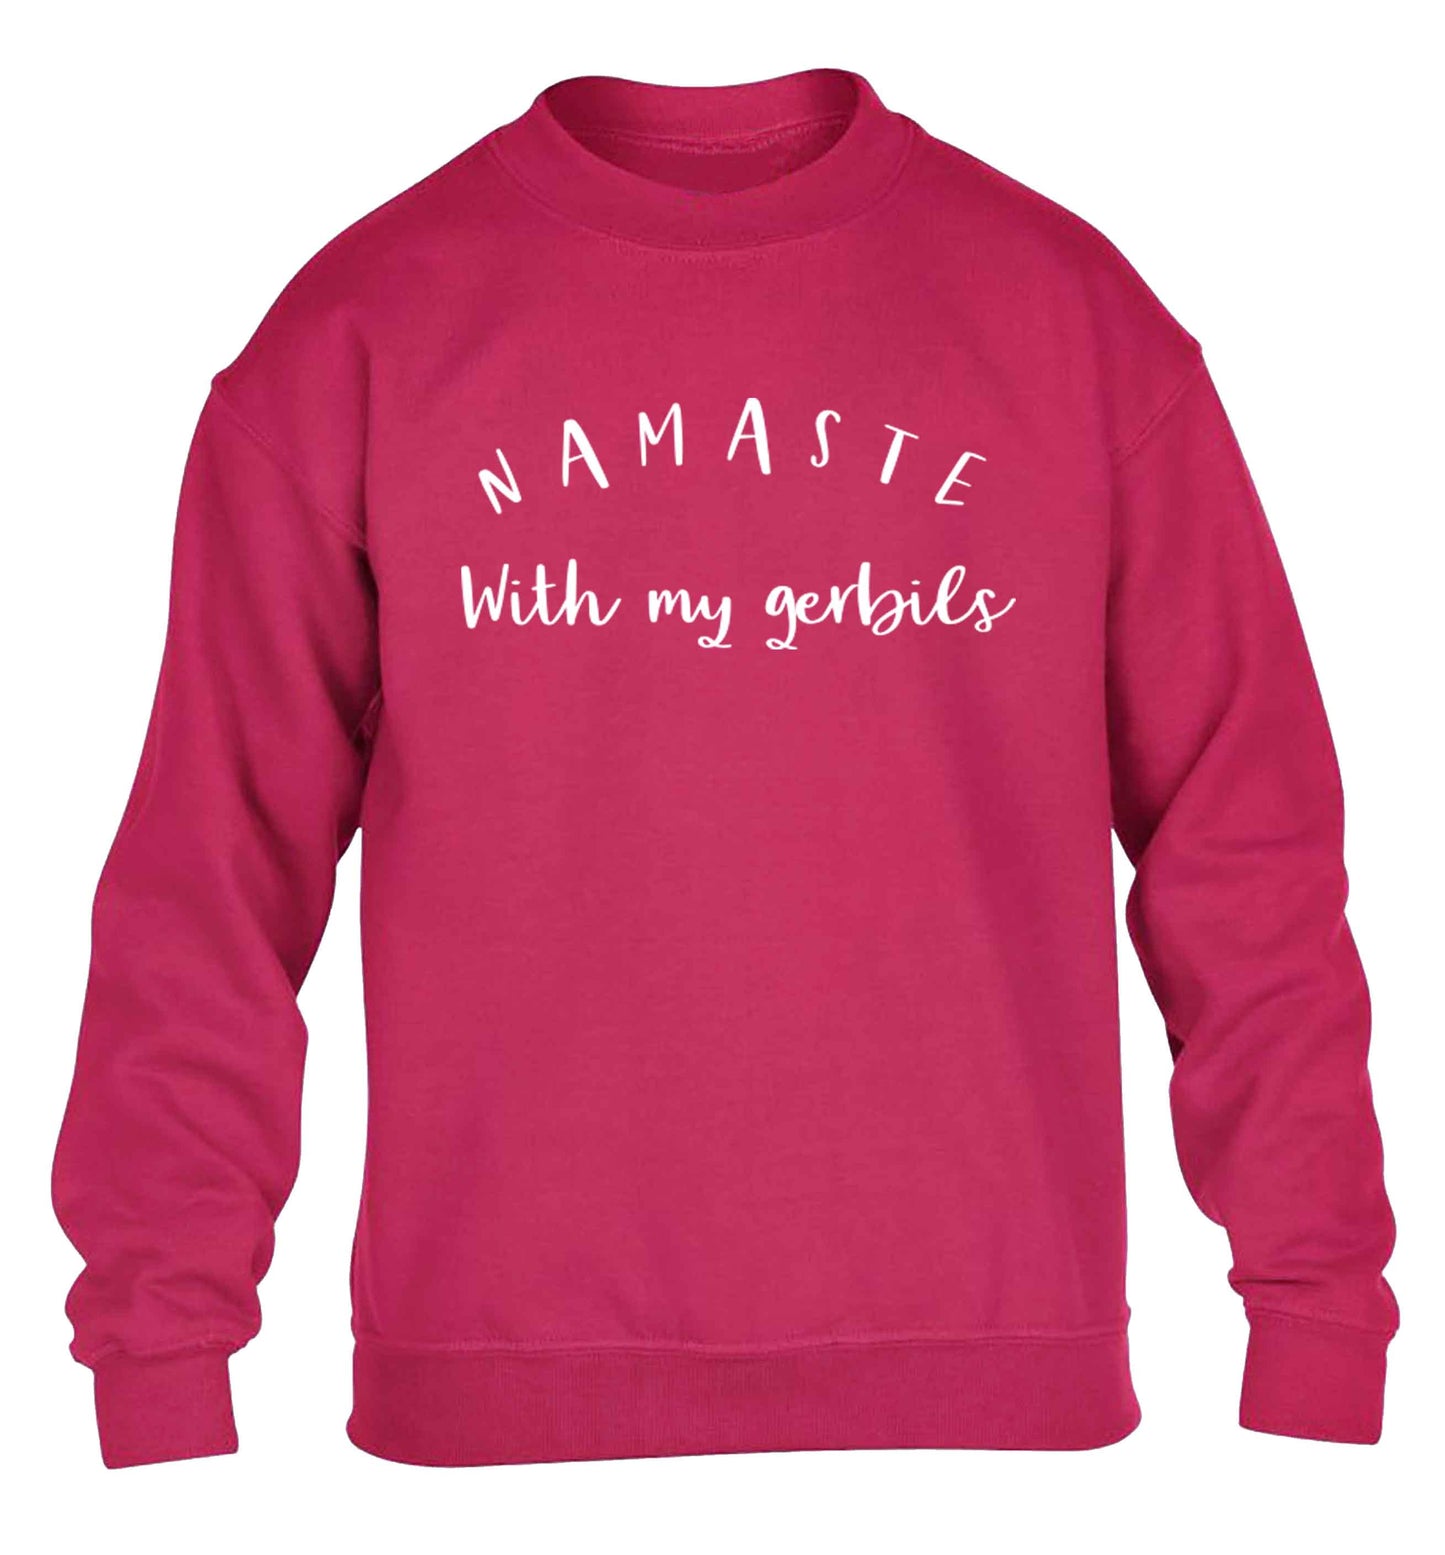 Namaste with my gerbils children's pink sweater 12-13 Years